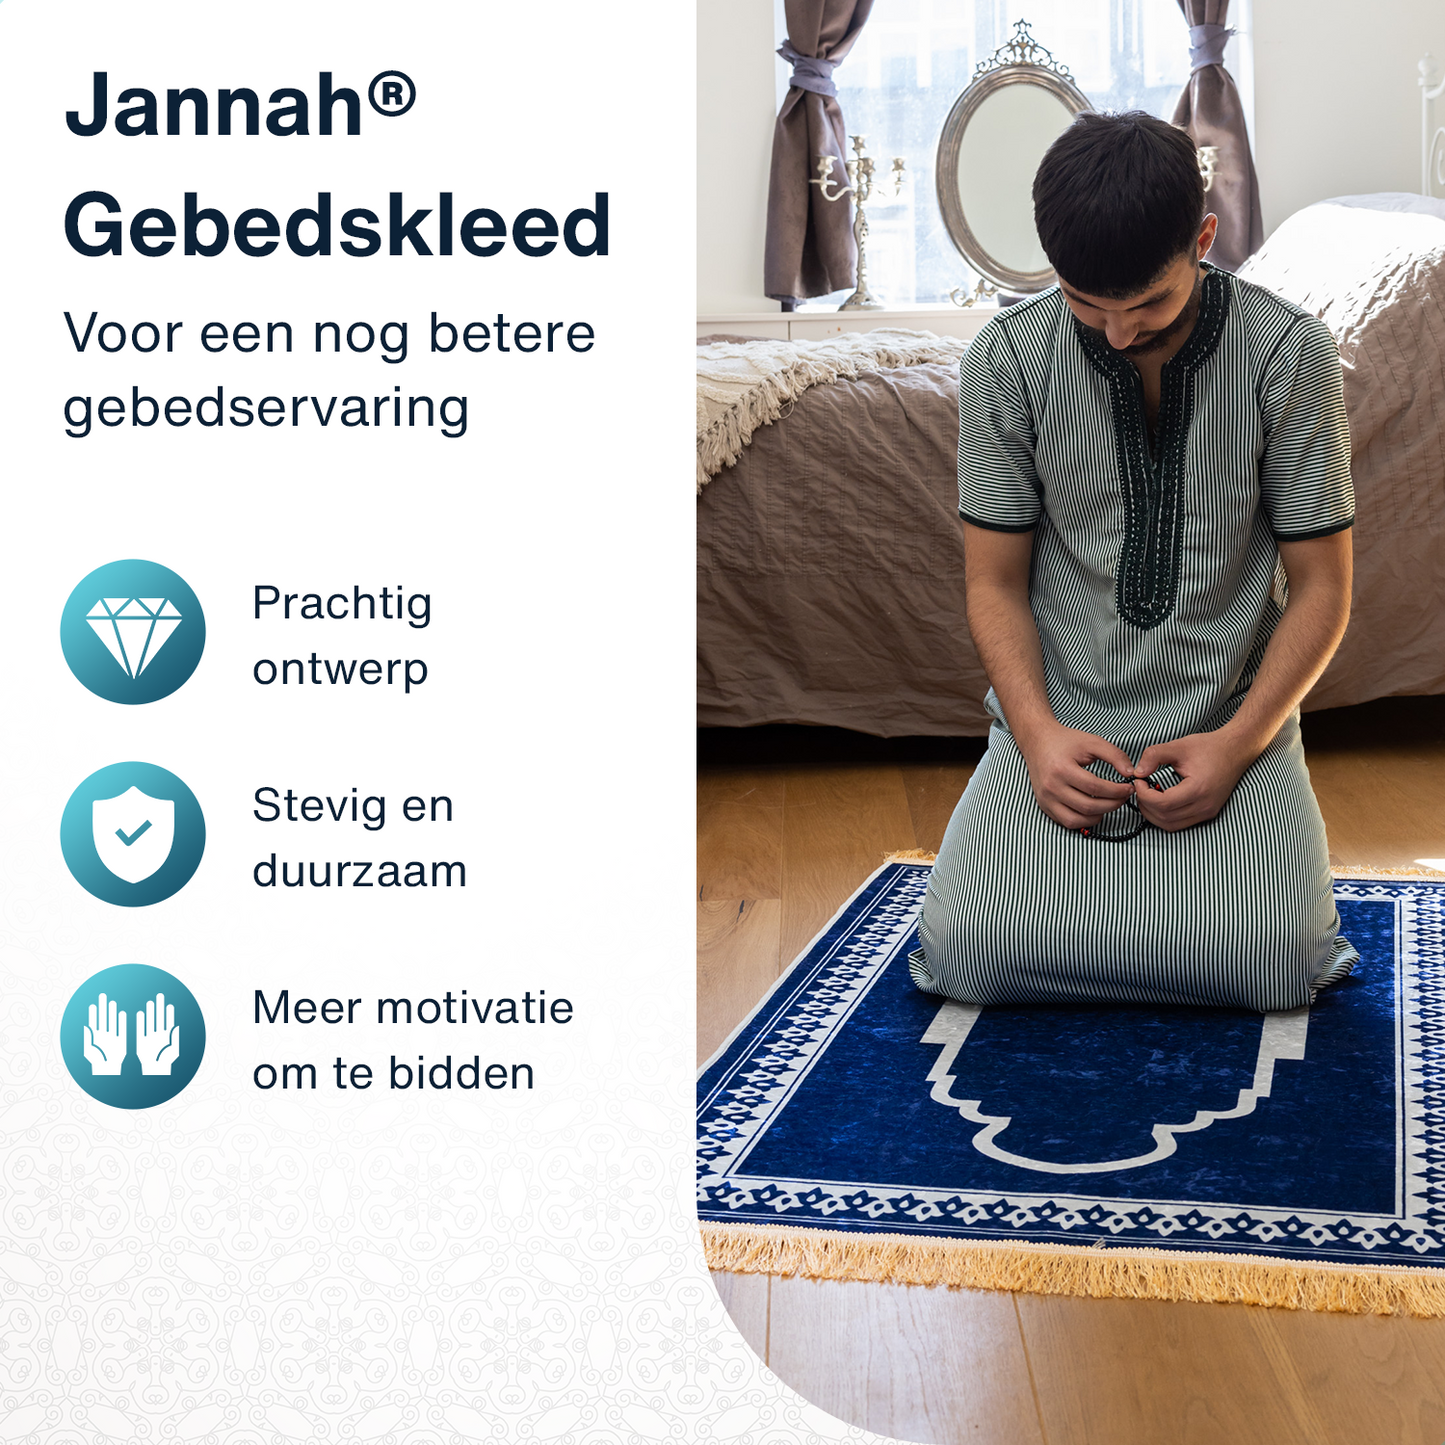 Jannah Islamic Prayer Rug - Blue with white